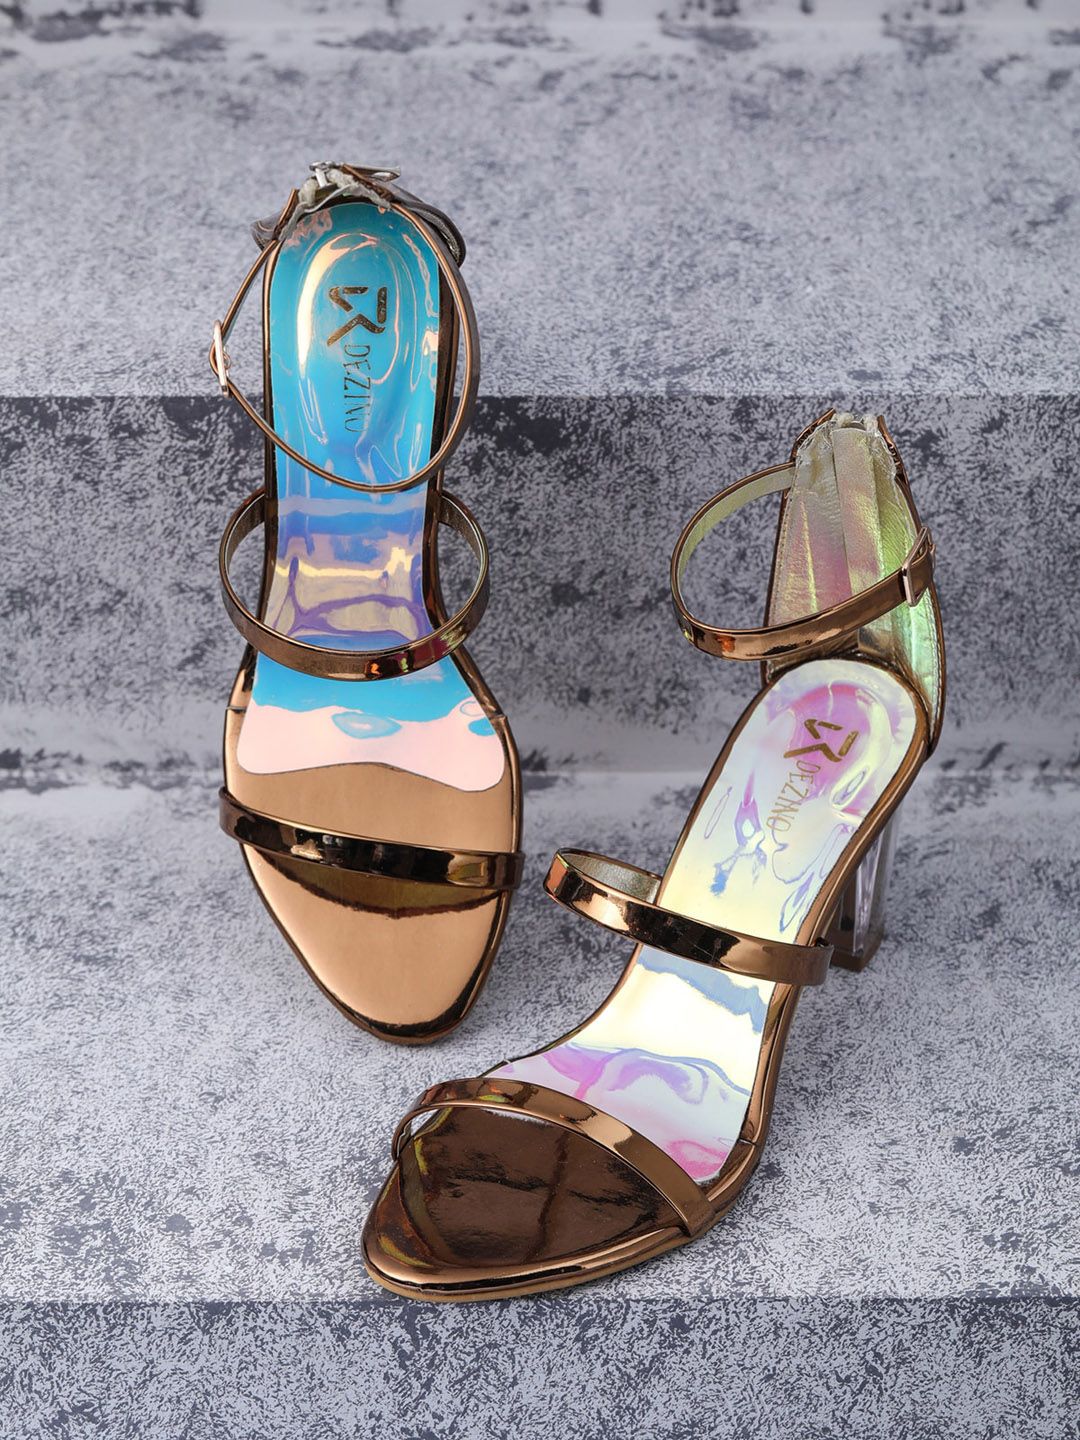 R DEZINO Copper-Toned Block Sandals with Buckles Price in India